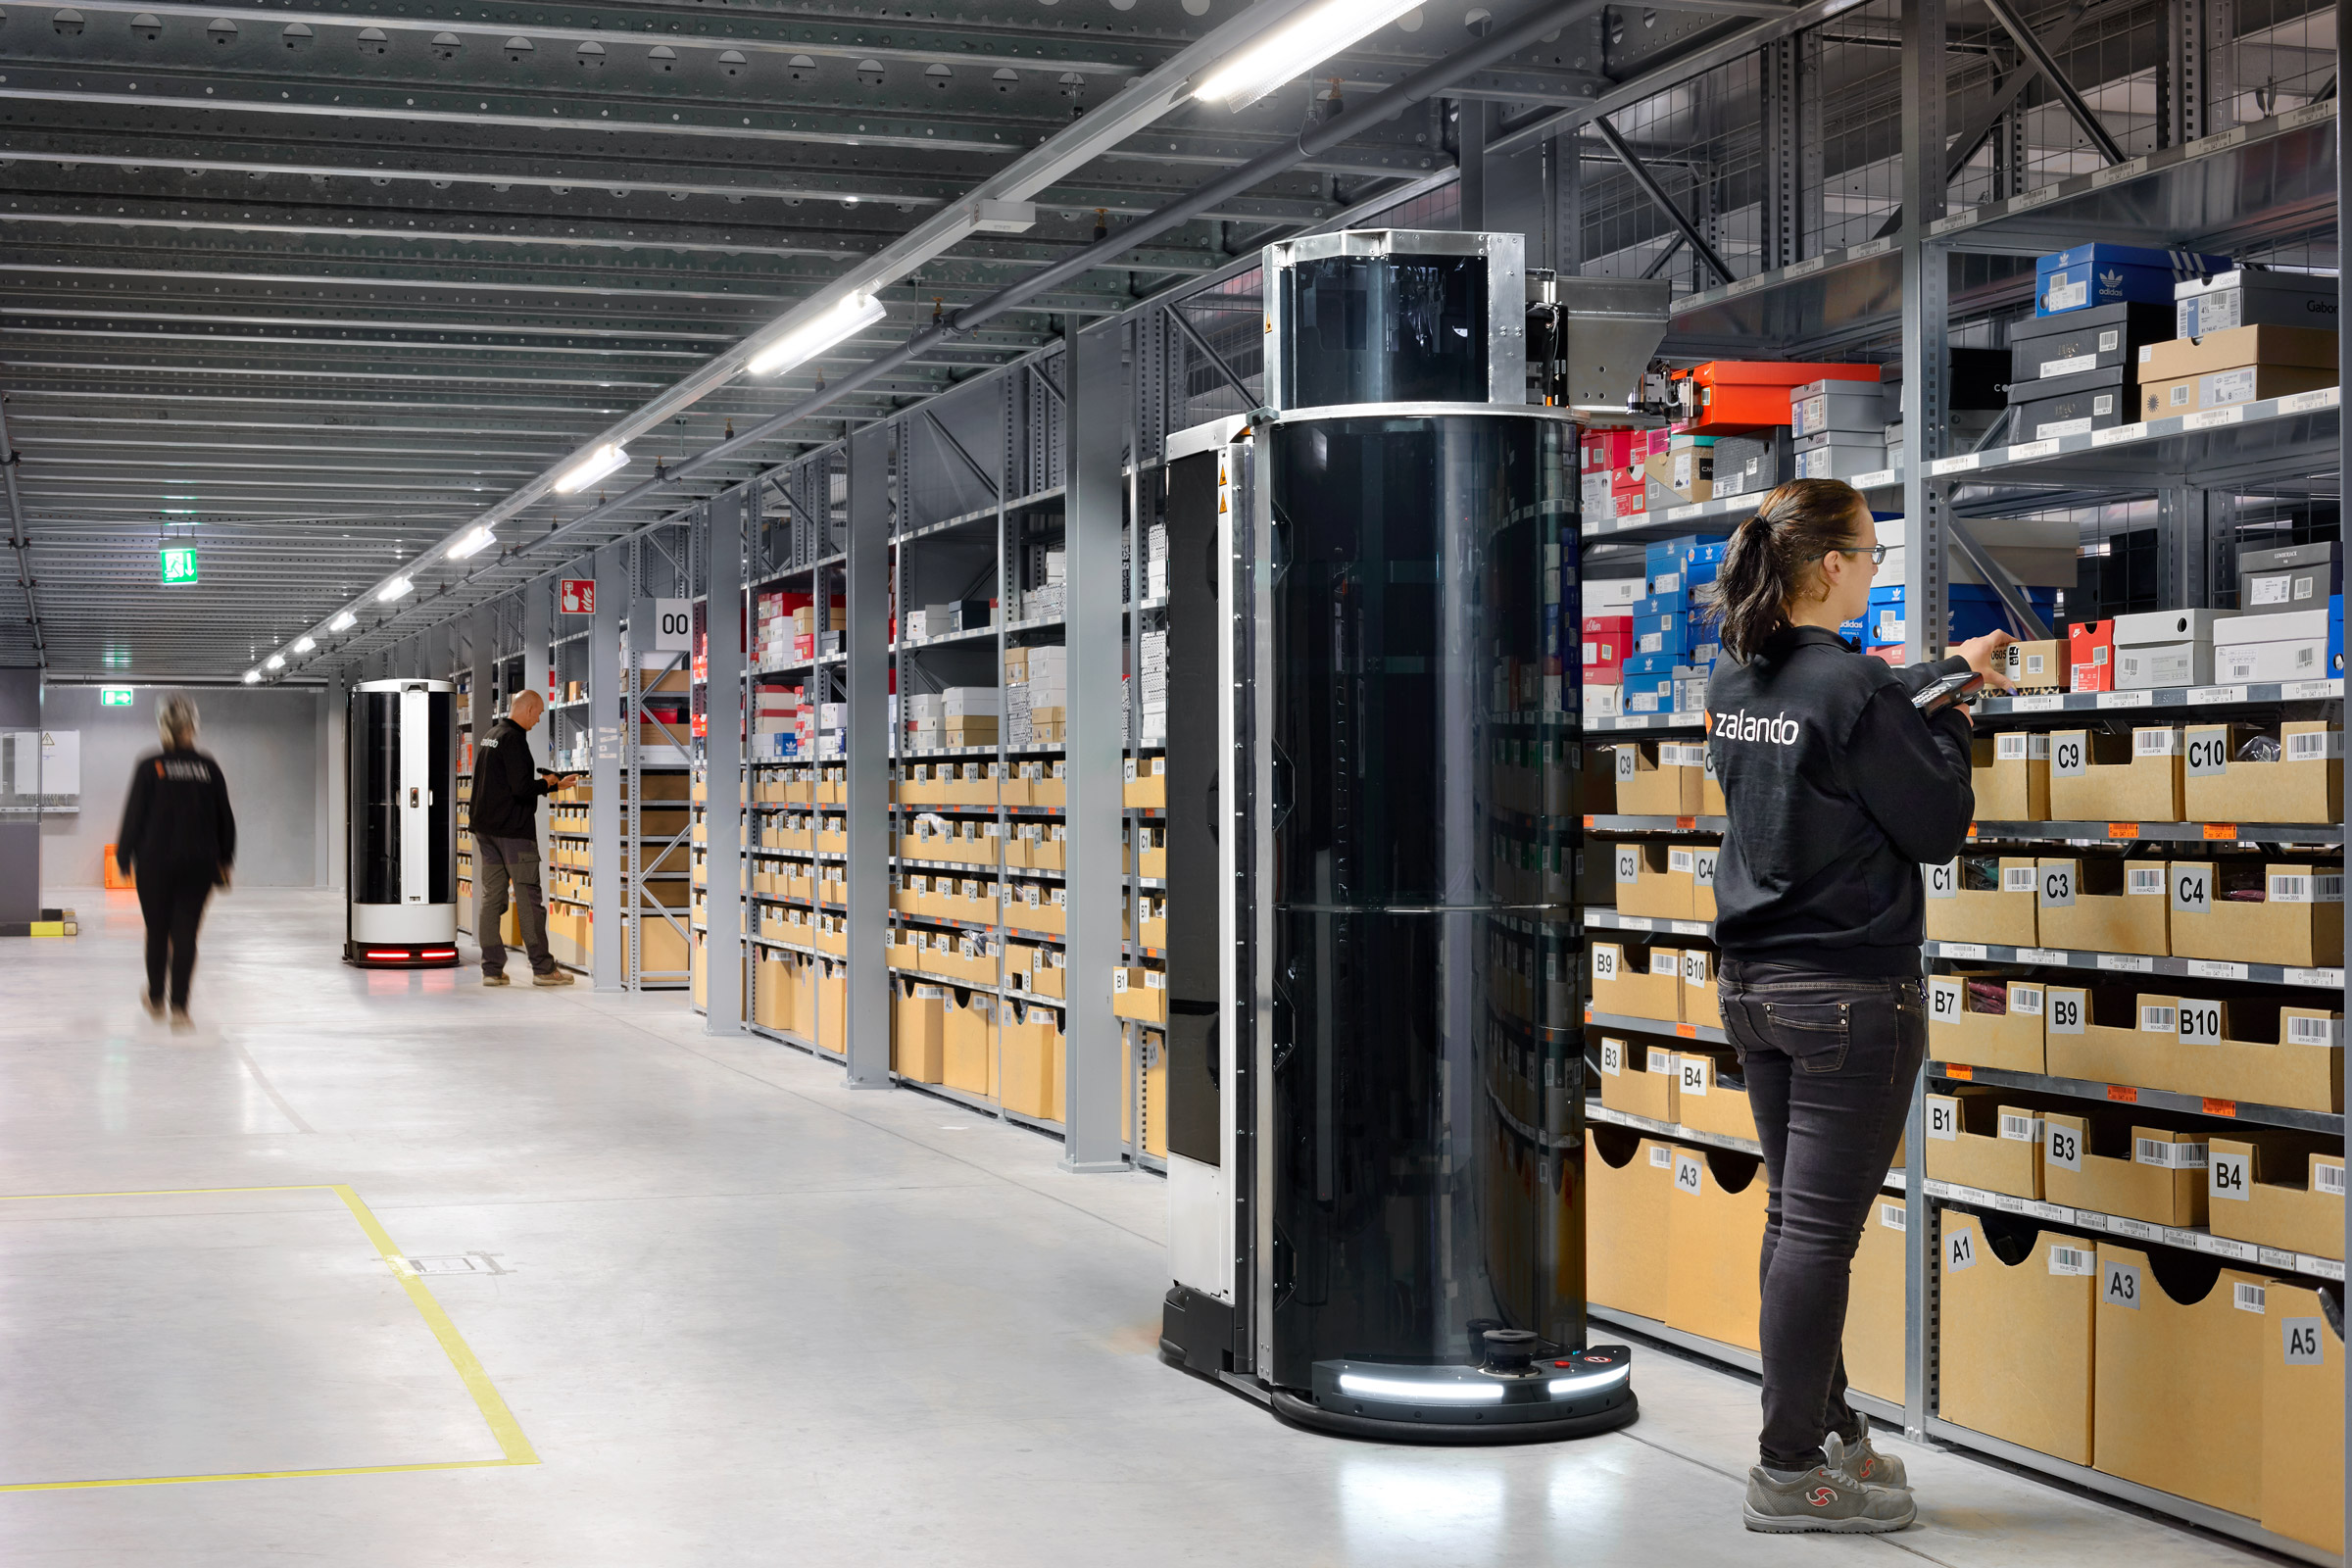 Zalando warehouse with employees working alongside mobile robots